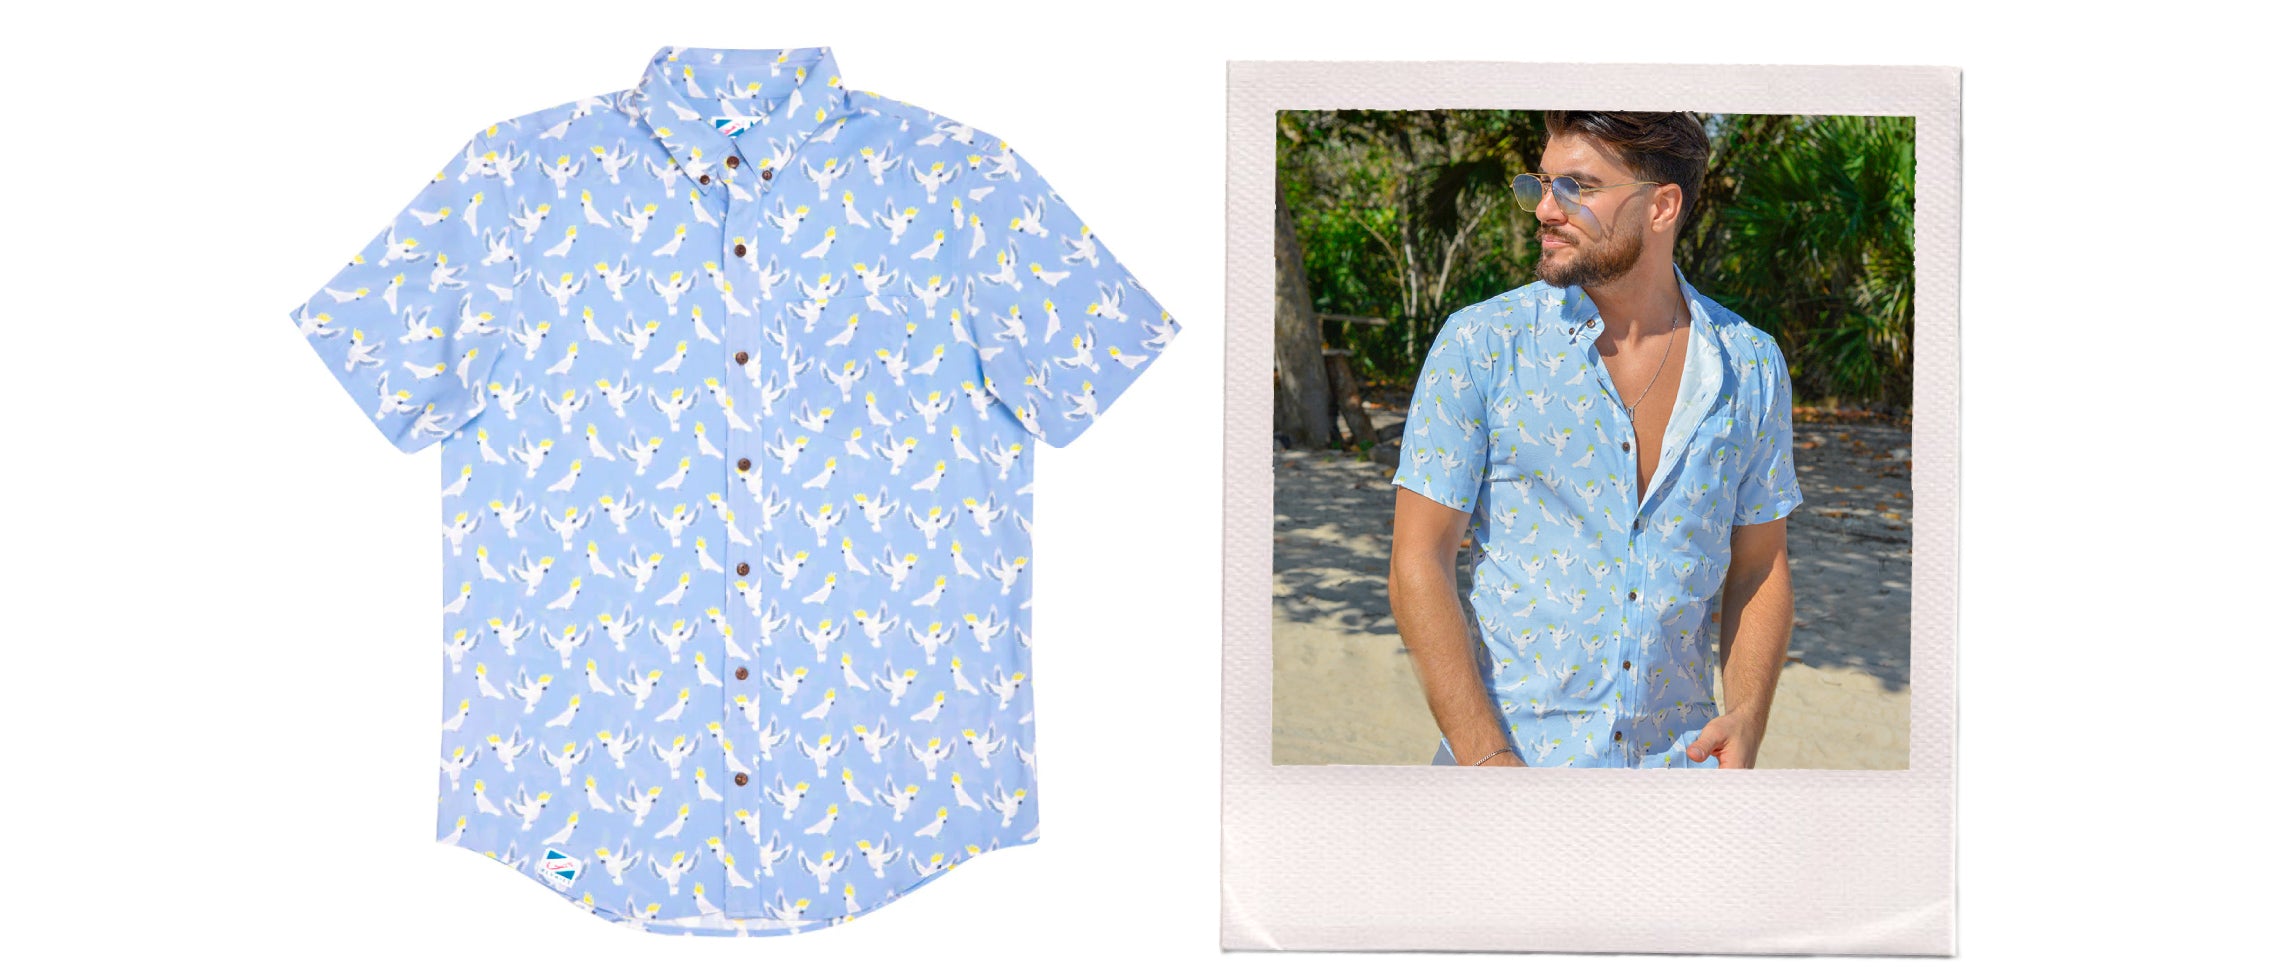 Fresh hawaiian shirt - Coackatoo printed shirt for summer days